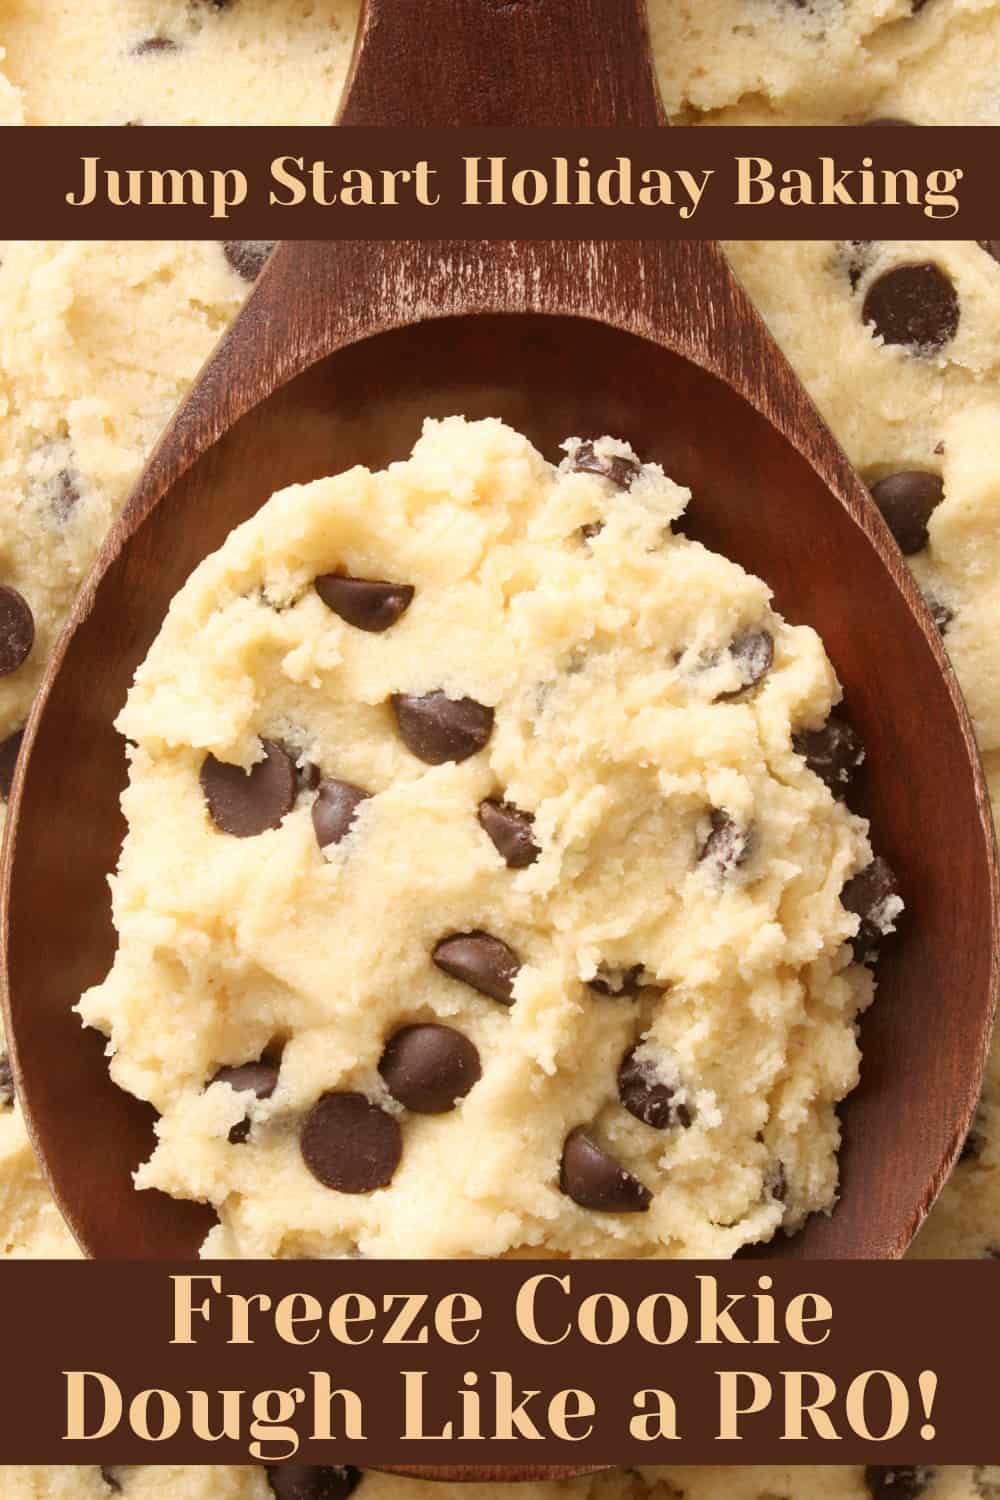 Jump start holiday baking: freeze cookie dough like a pro.